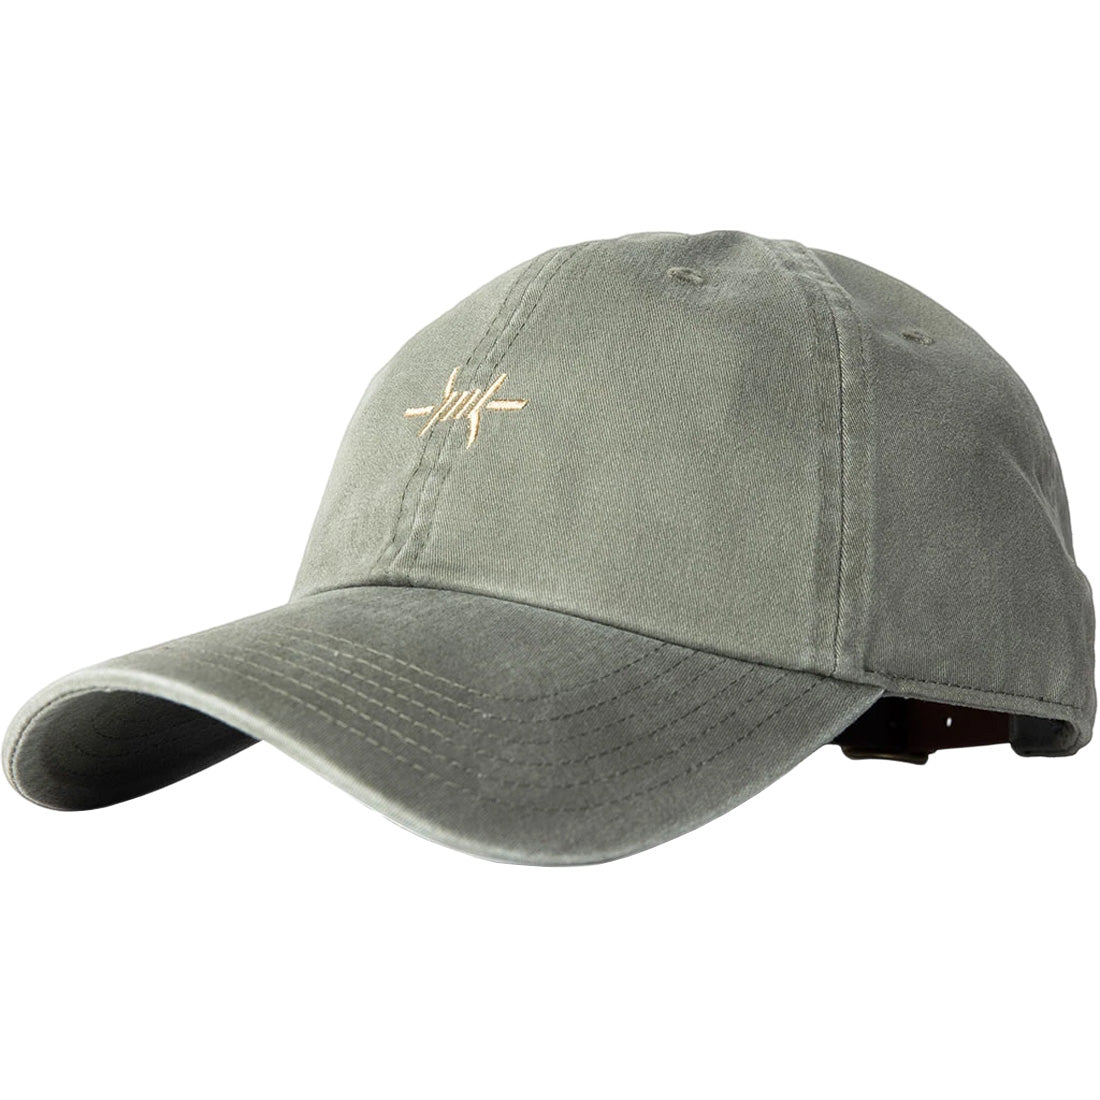 Texas Standard Cap